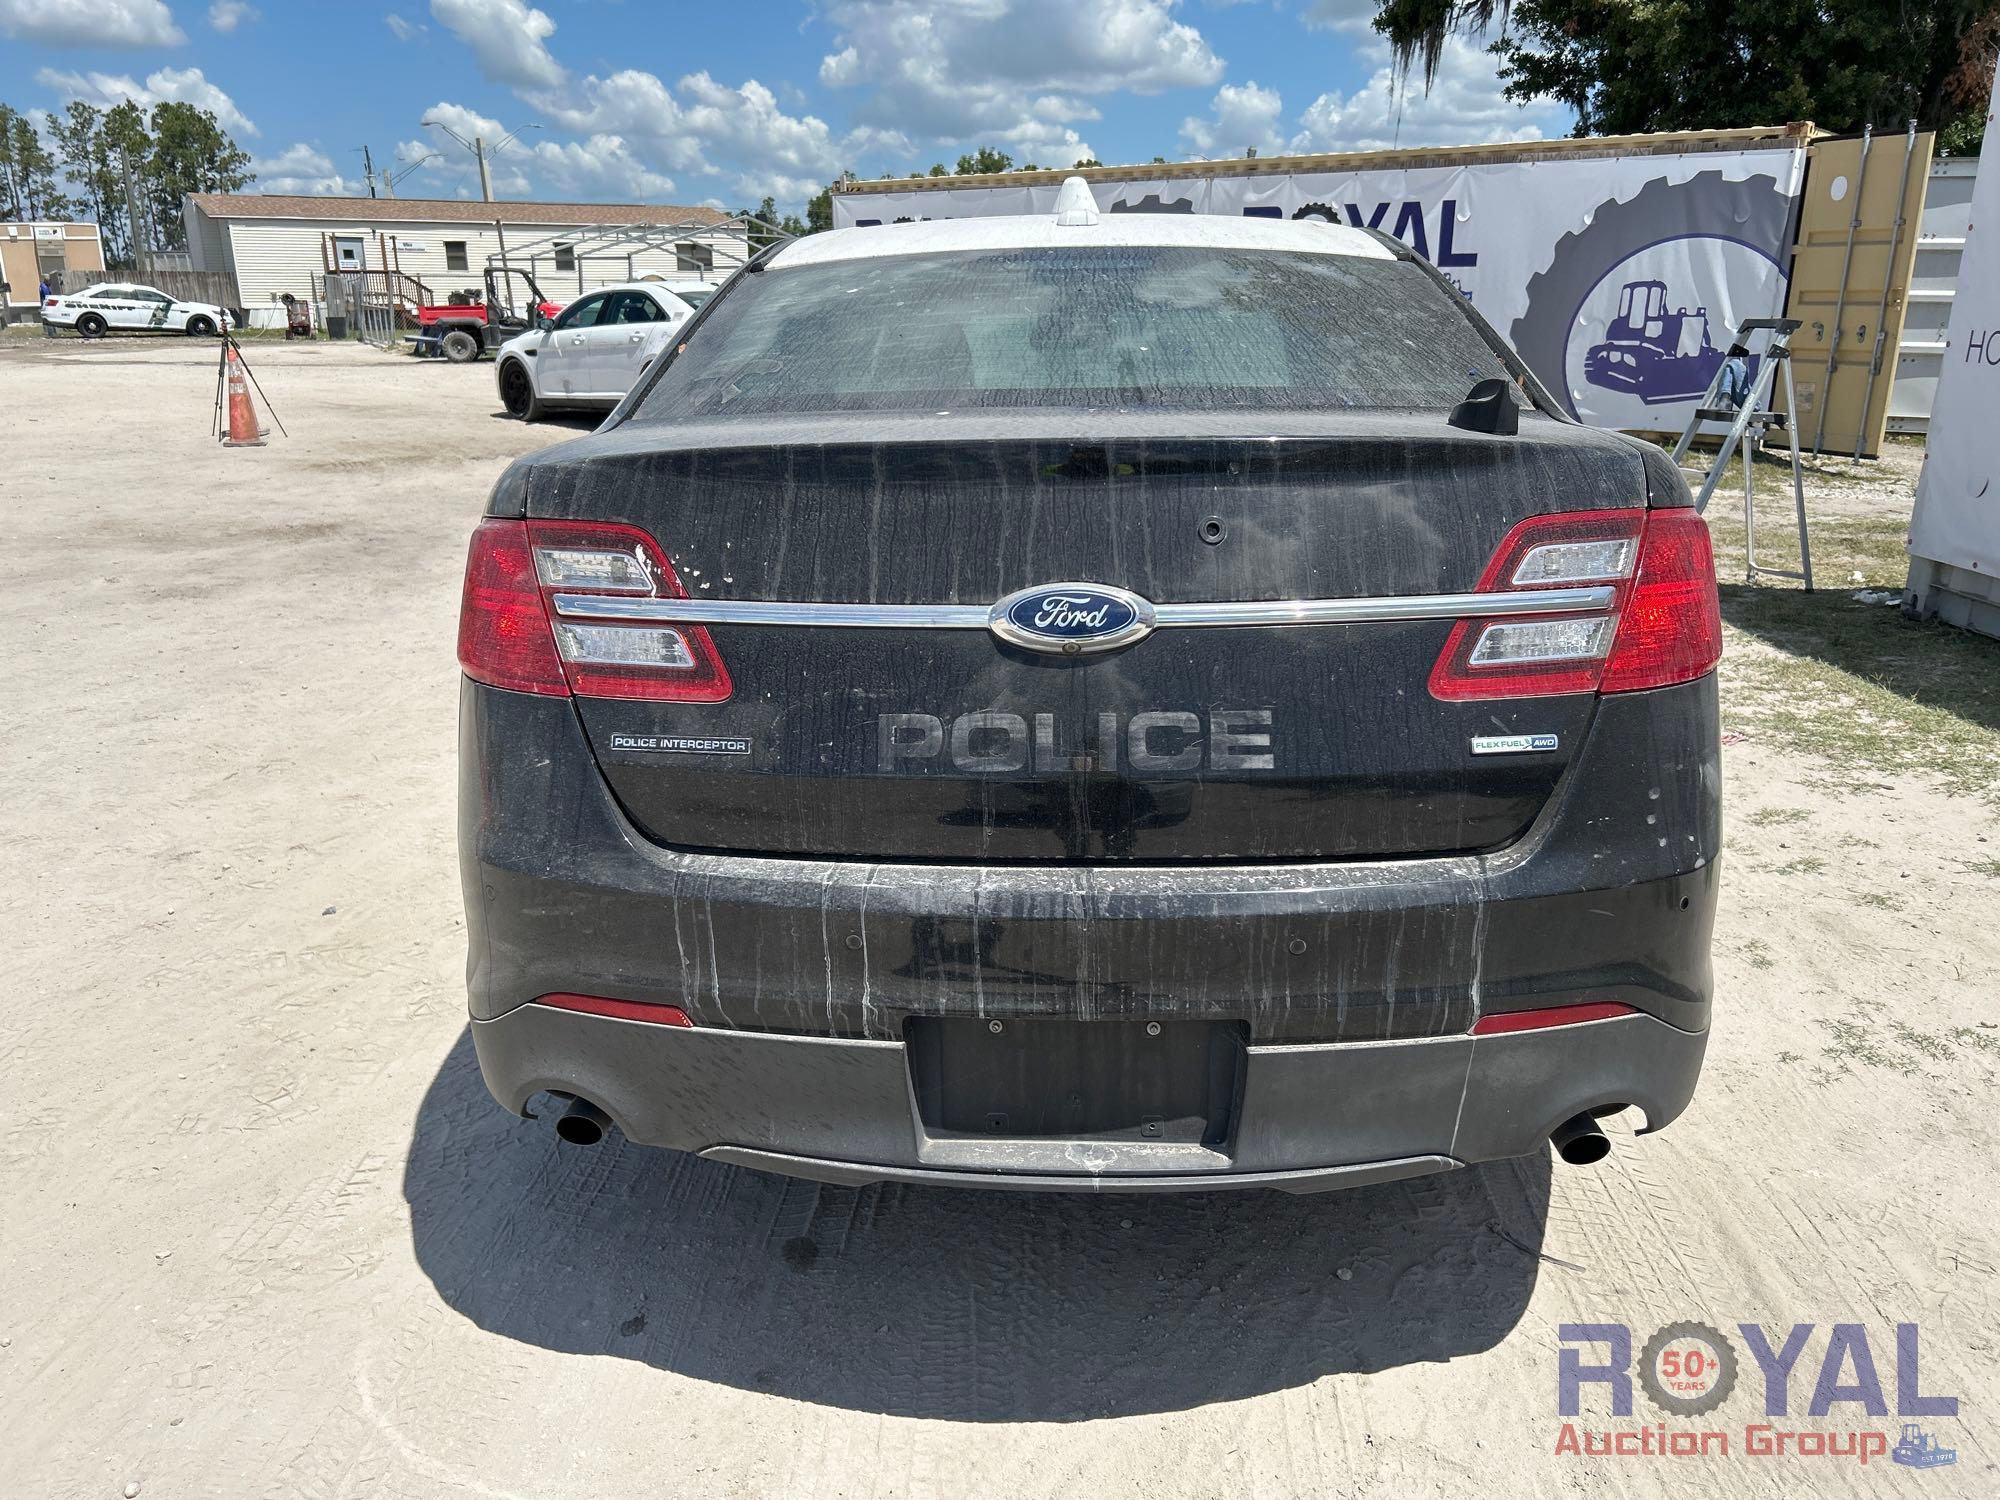 2016 Ford Taurus Police Cruiser